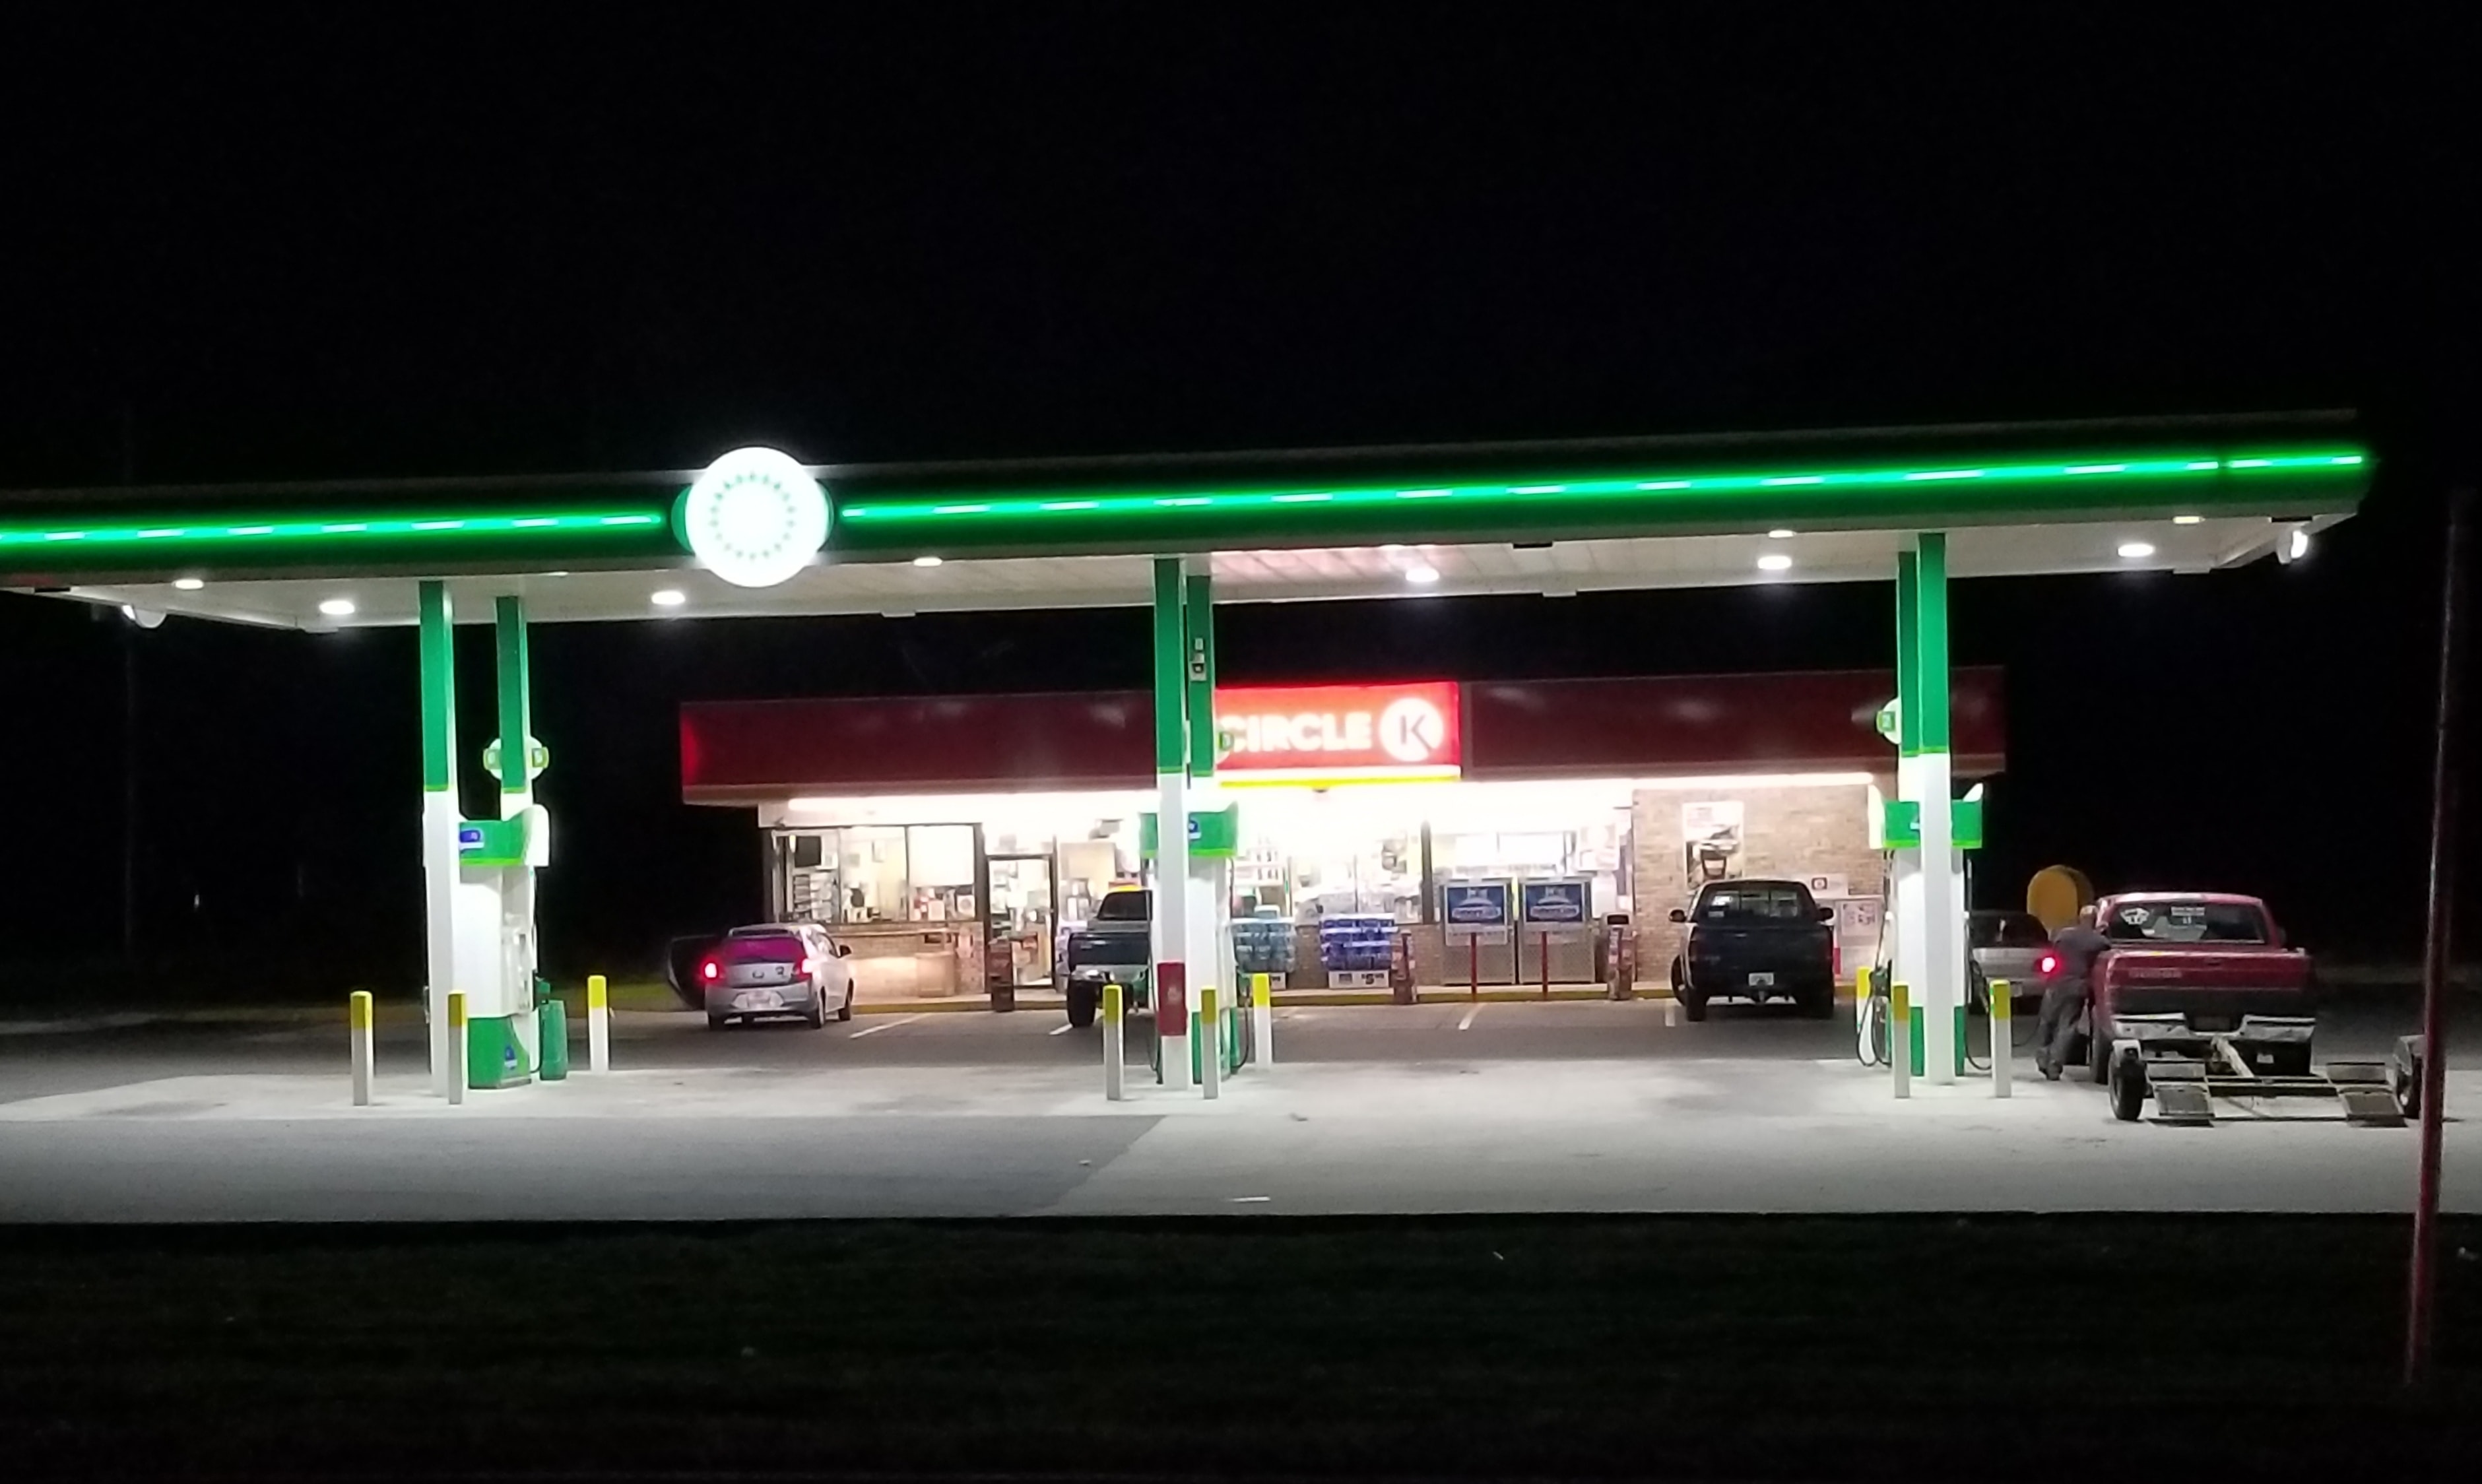 bp - Reddick (FL 32686), US, any gas station near me